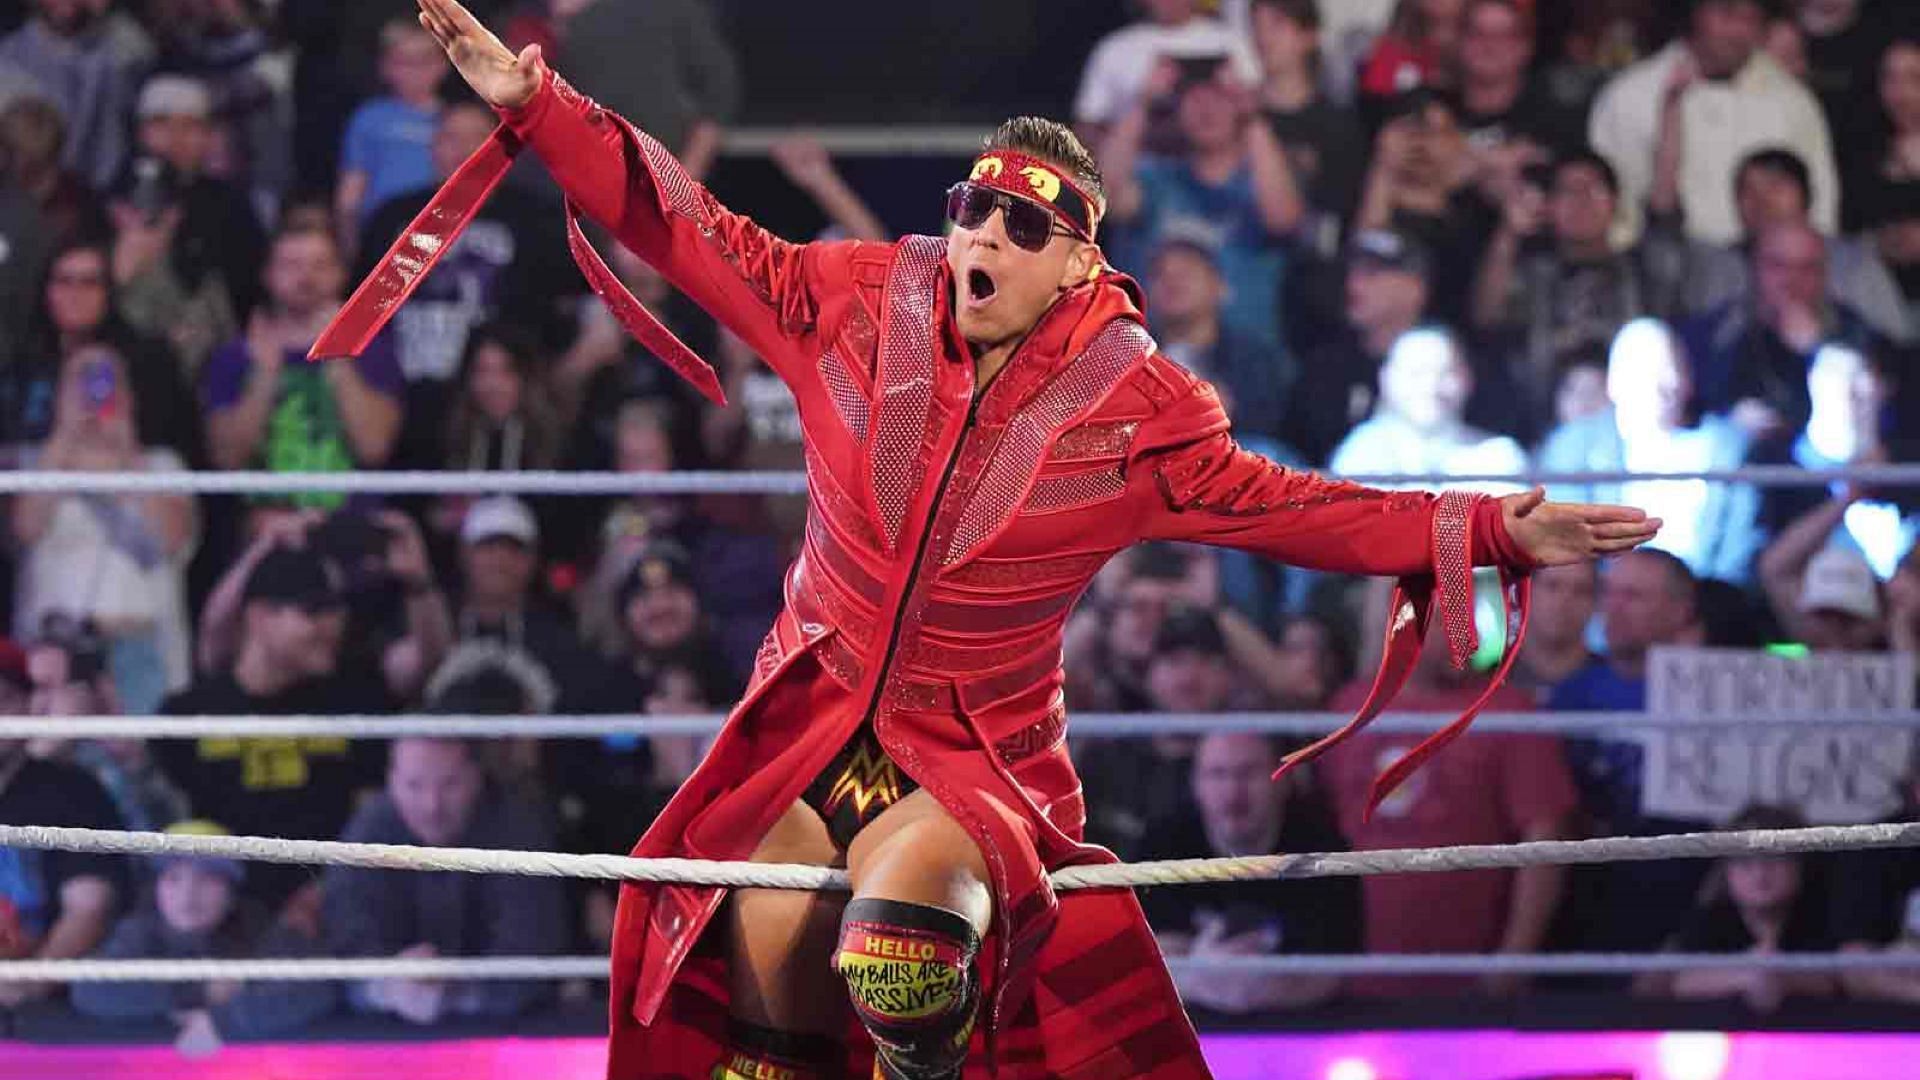 The Miz makes his entrance on WWE SmackDown